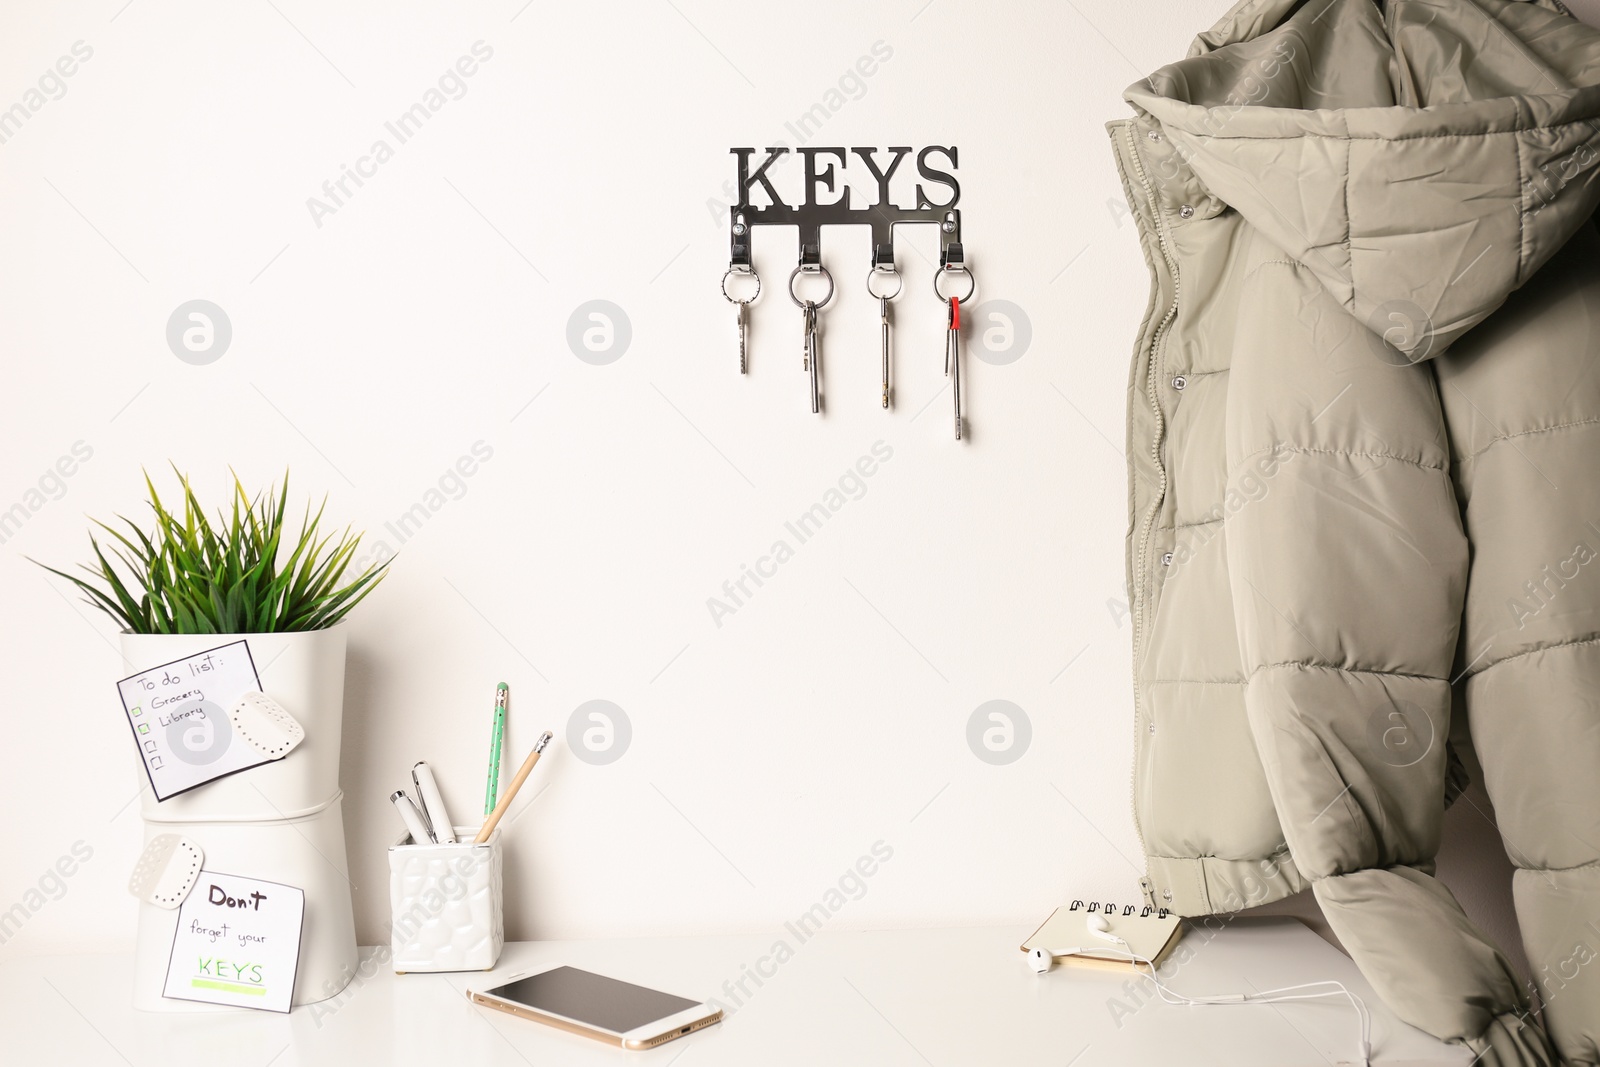 Photo of Metal key holder on light wall indoors